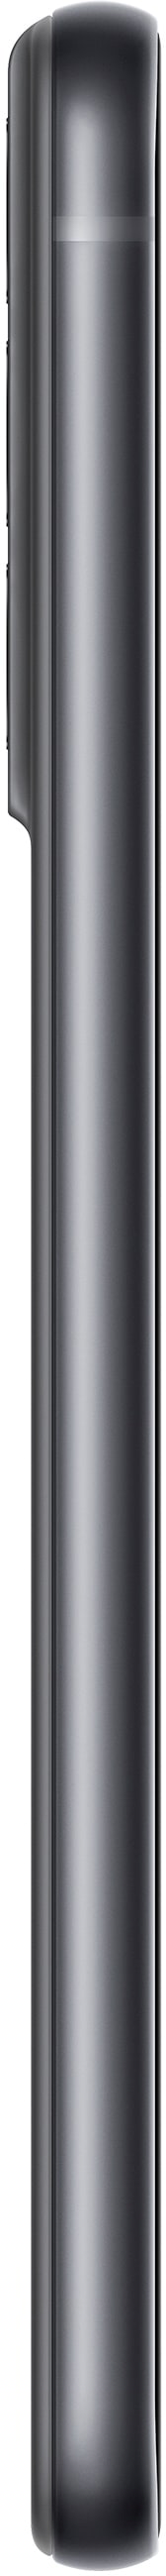 SAMSUNG Galaxy S21 FE 5G, 256 GB, Graphite